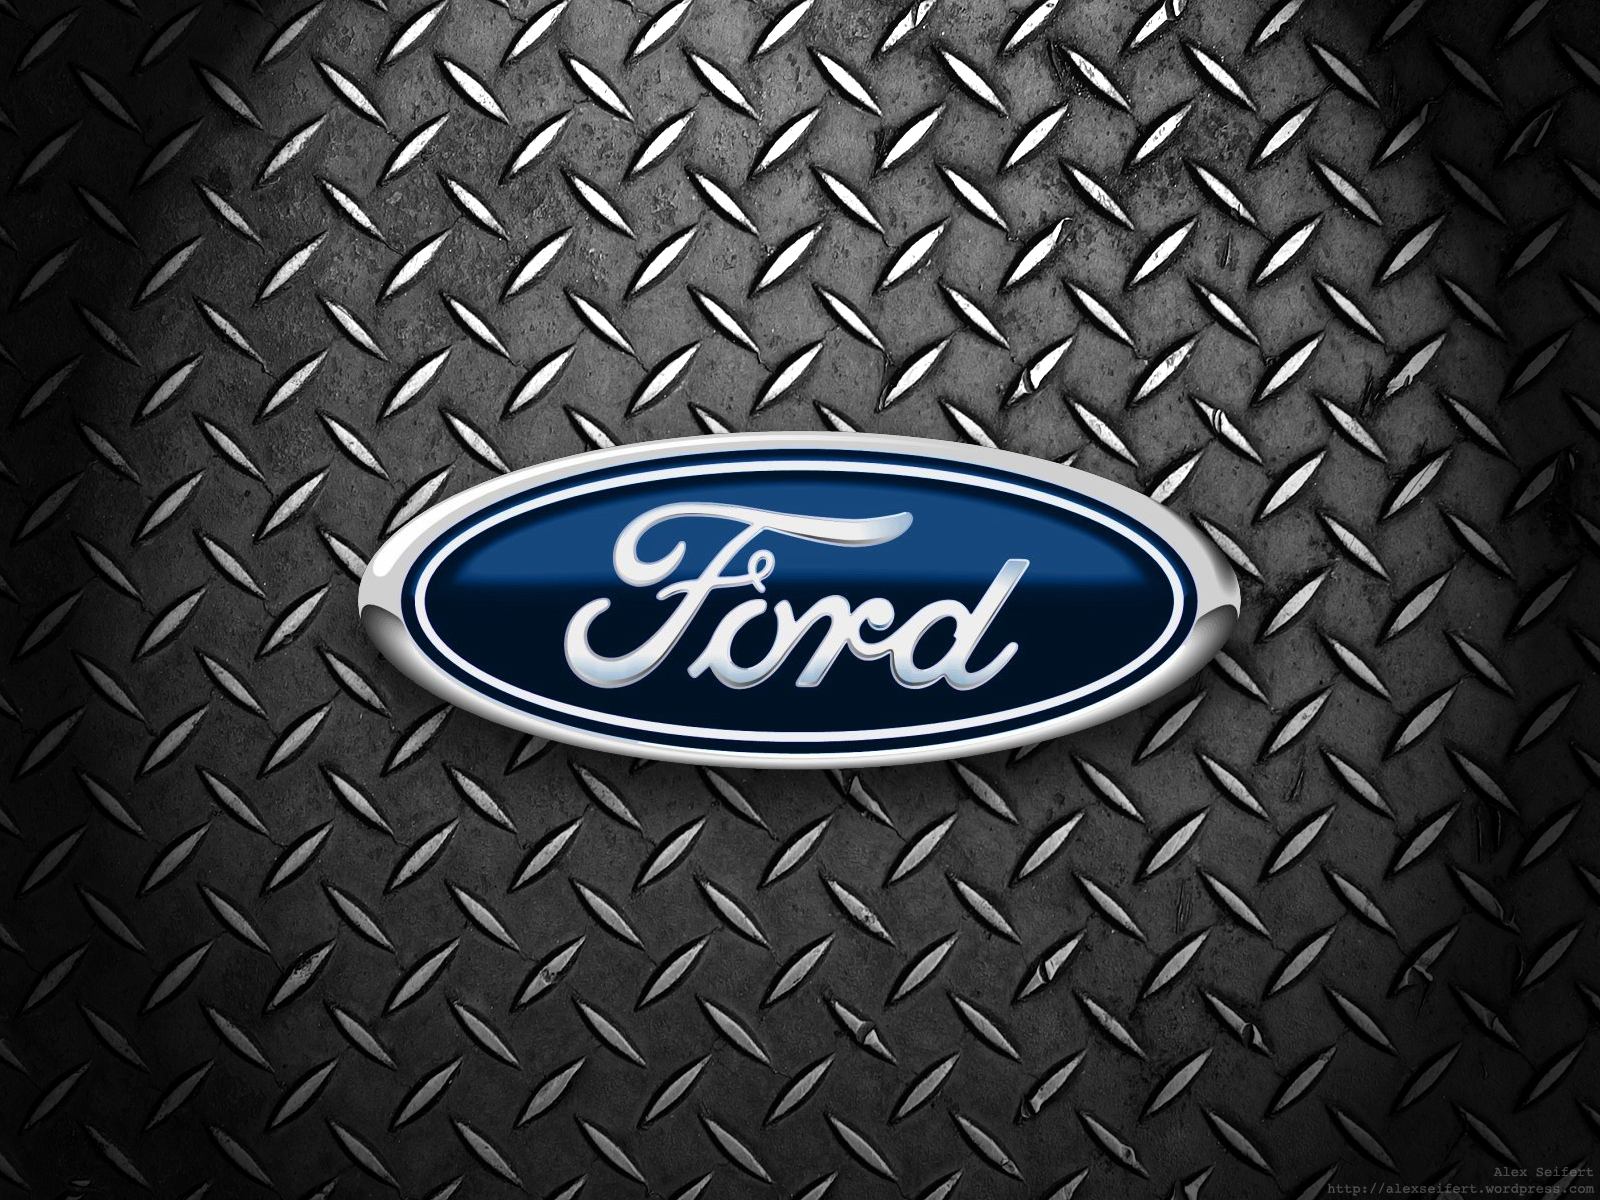 Cool Ford Logos, bugatti logo wallpaper hd - JohnyWheels